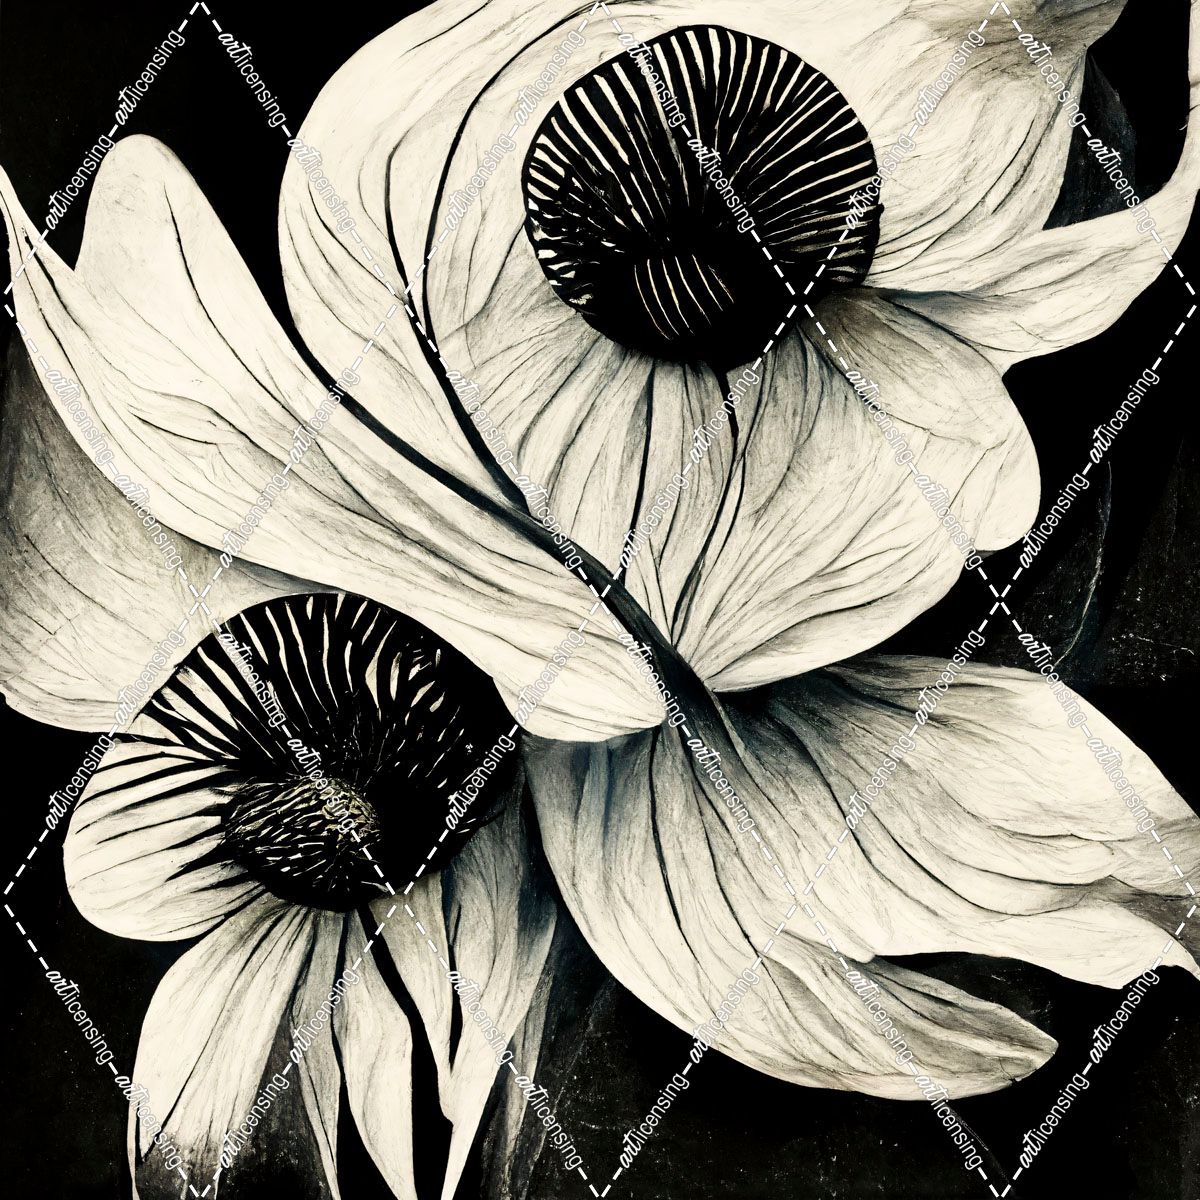 B021 Flowers Black White